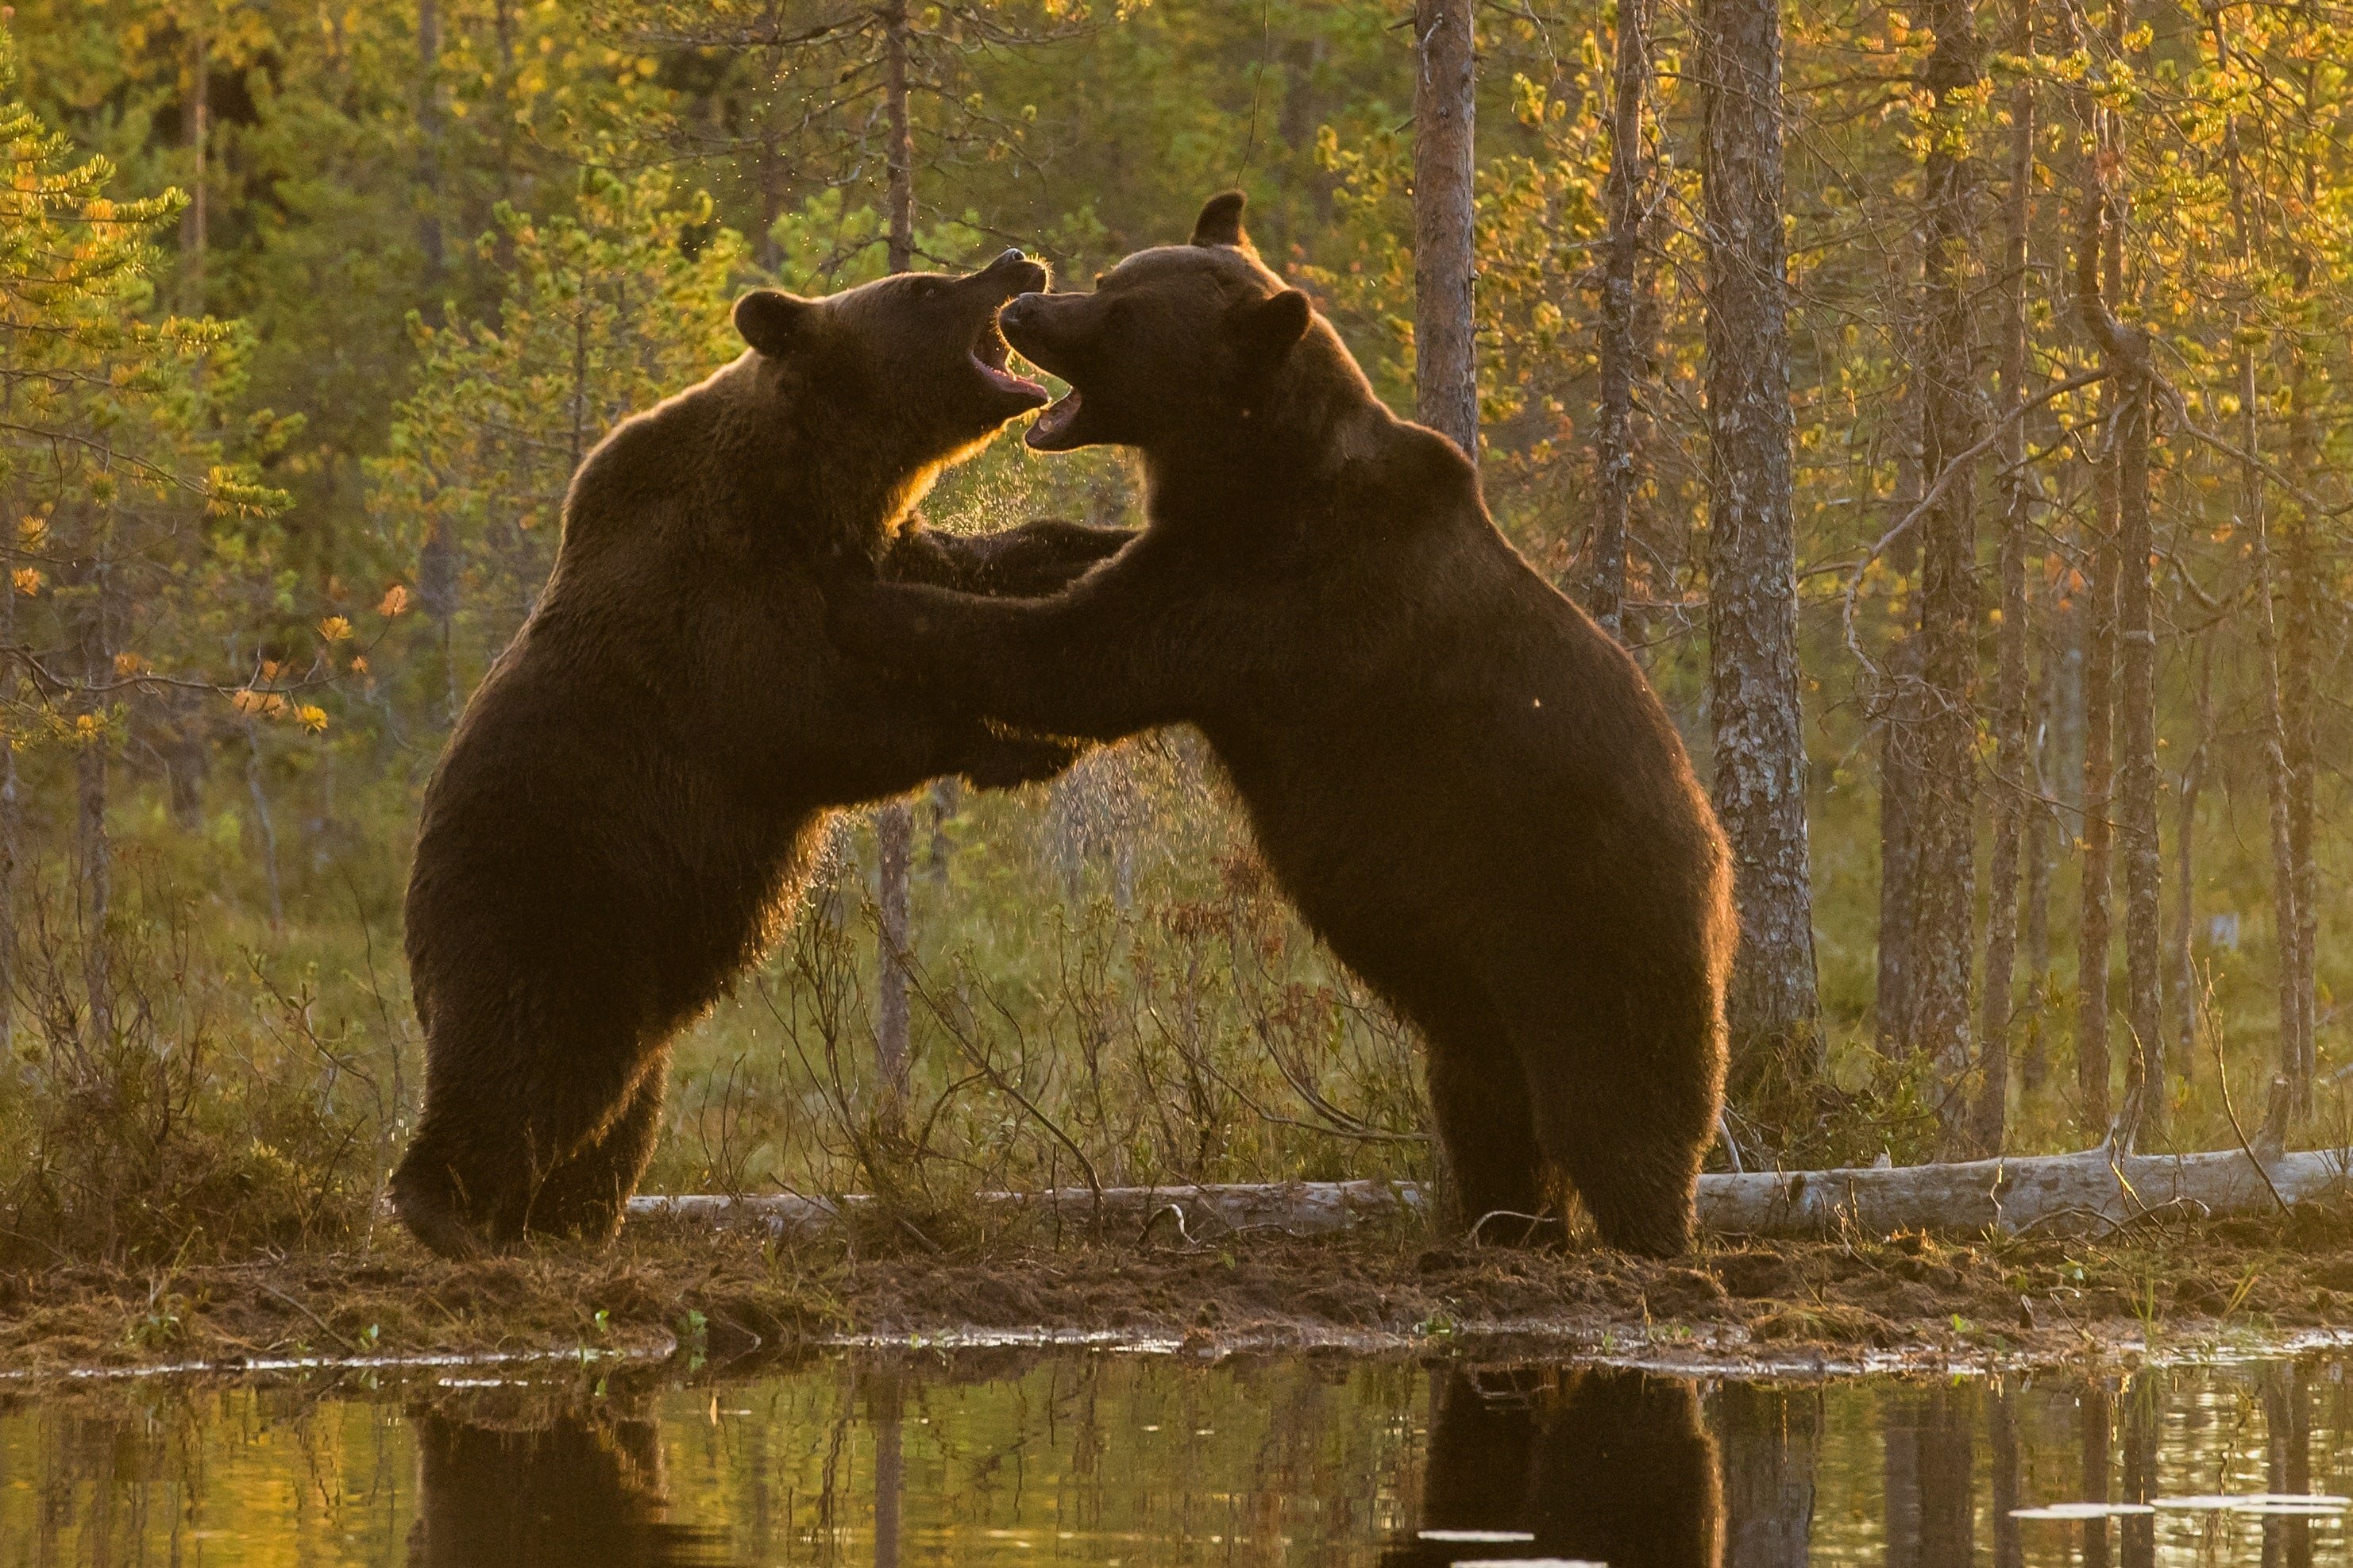 Bears 2 shop. Два медведя. Бурый медведь драка. Медведи дерутся.